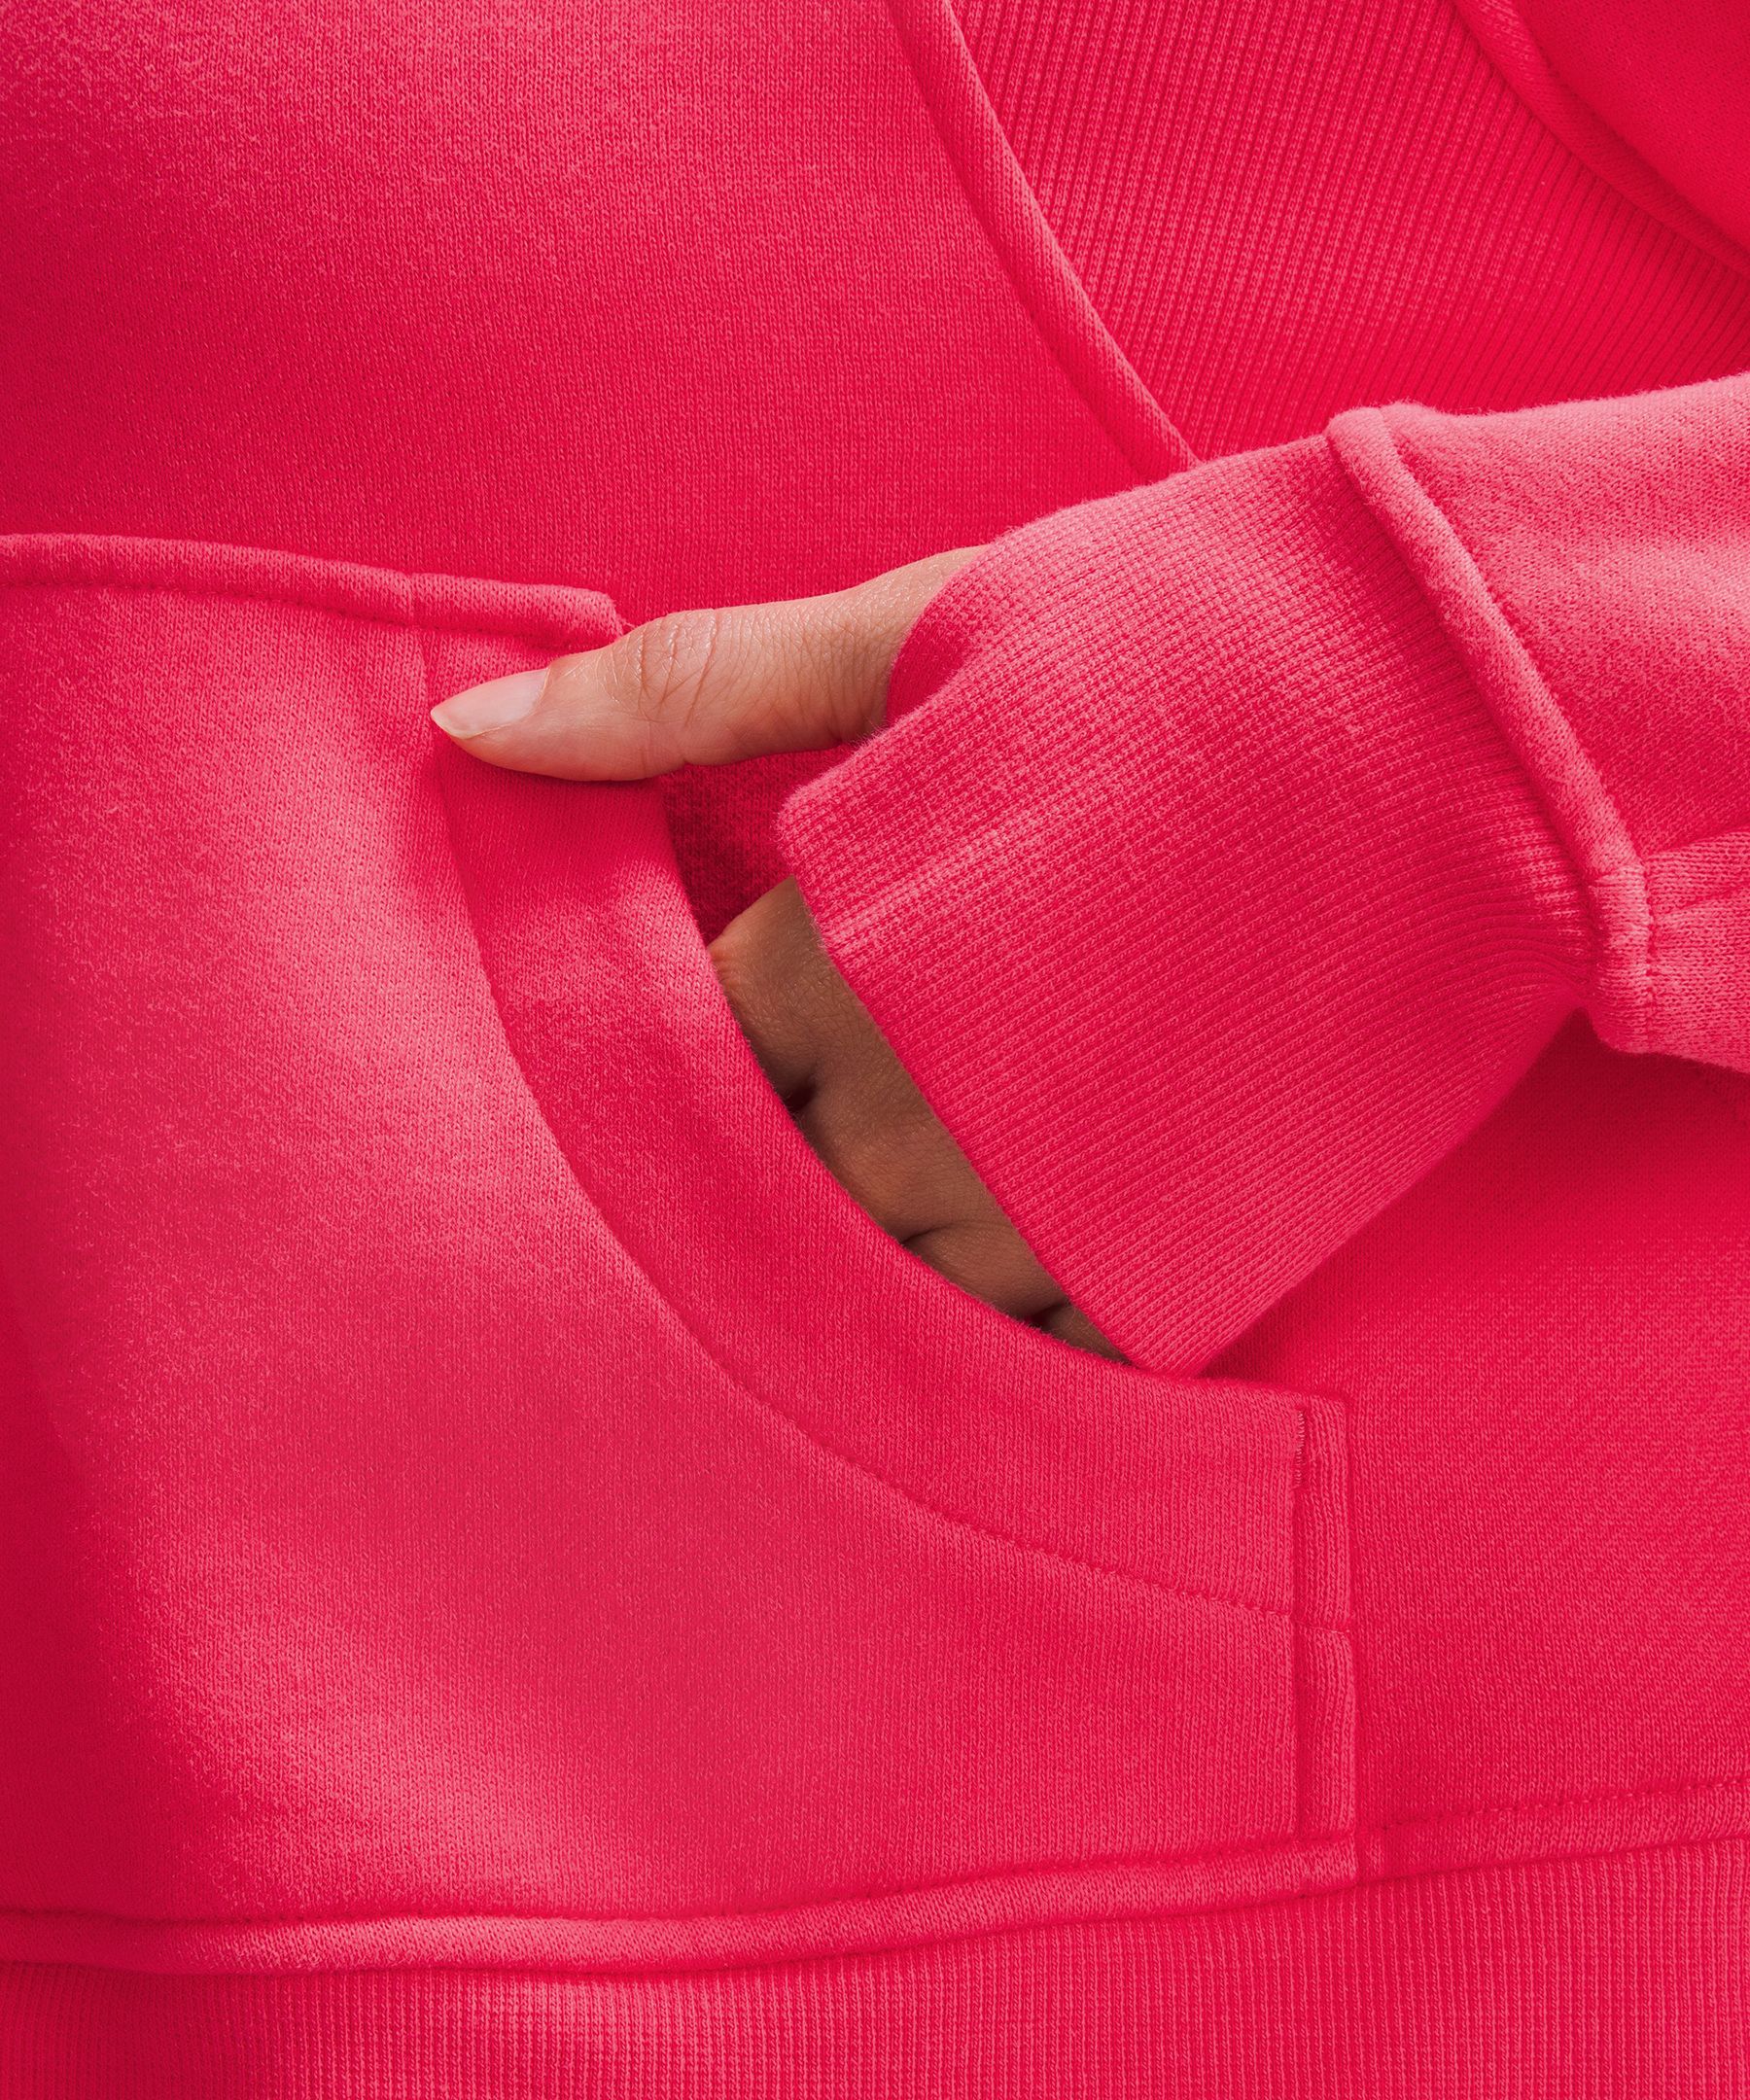 Lululemon Scuba Oversized Half Zip Hoodie Heathered Pink Taupe - $135 -  From Caroline